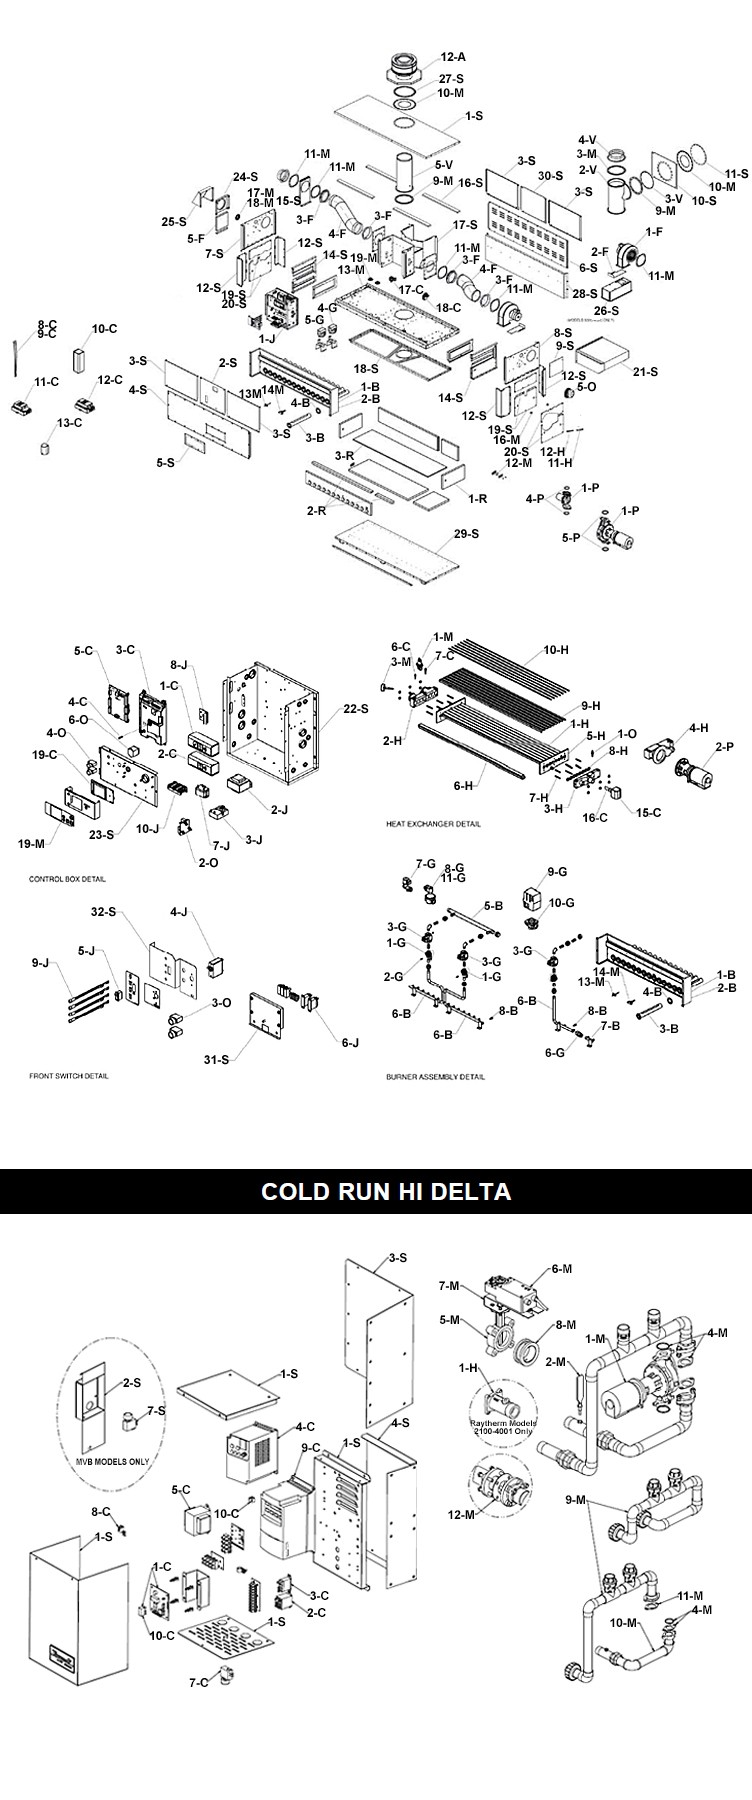 Raypak HI Delta Cold Run P-752C Commercial Indoor-Outdoor Swimming Pool Heater | Propane Gas 750,000 BTUH | 016097 Parts Schematic